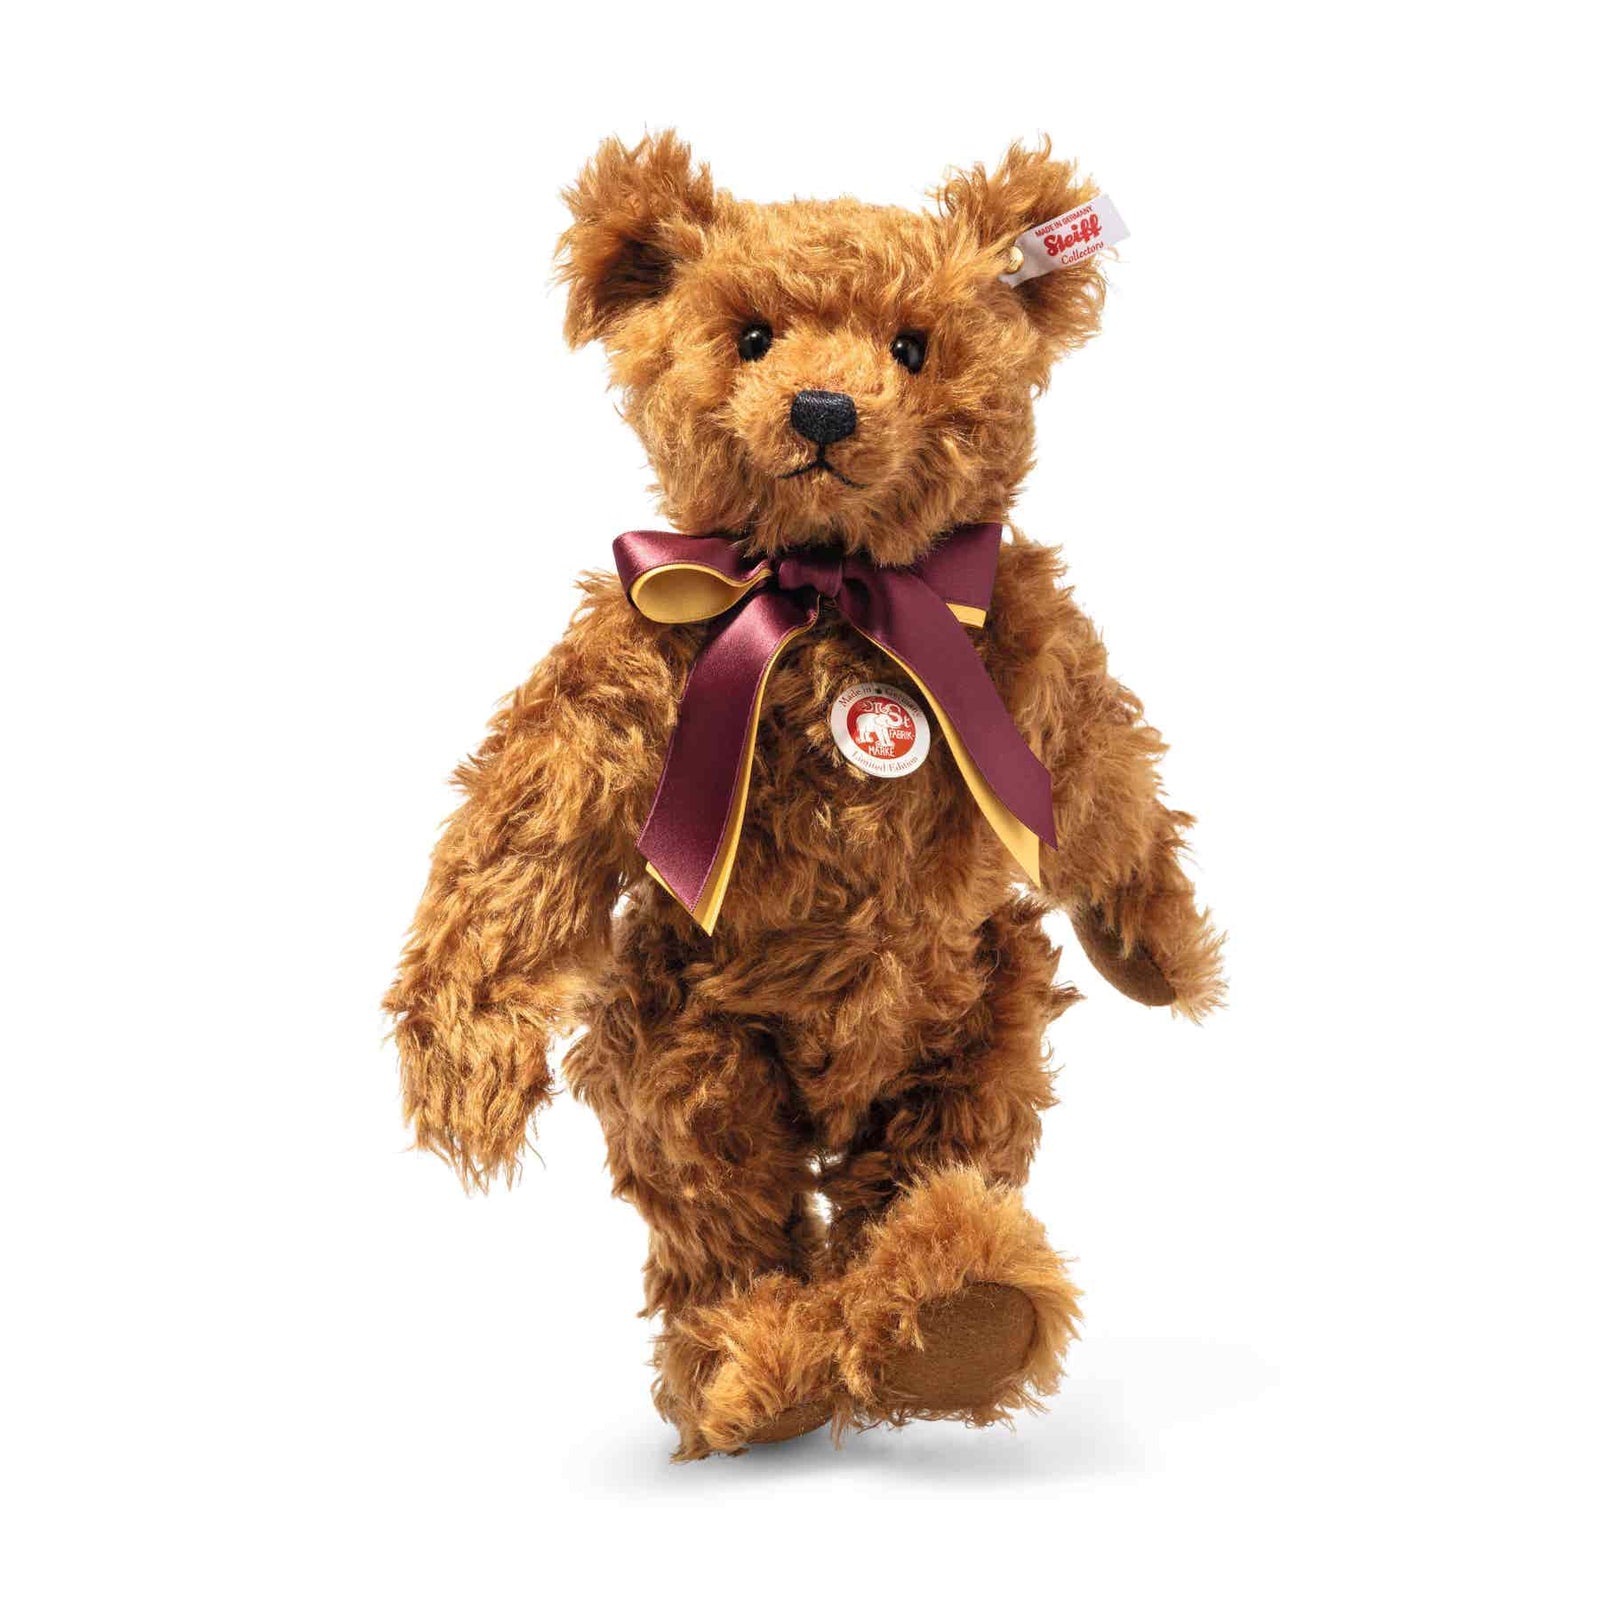 Steiff British Collectors' Teddy bear 2023-EAN 691447